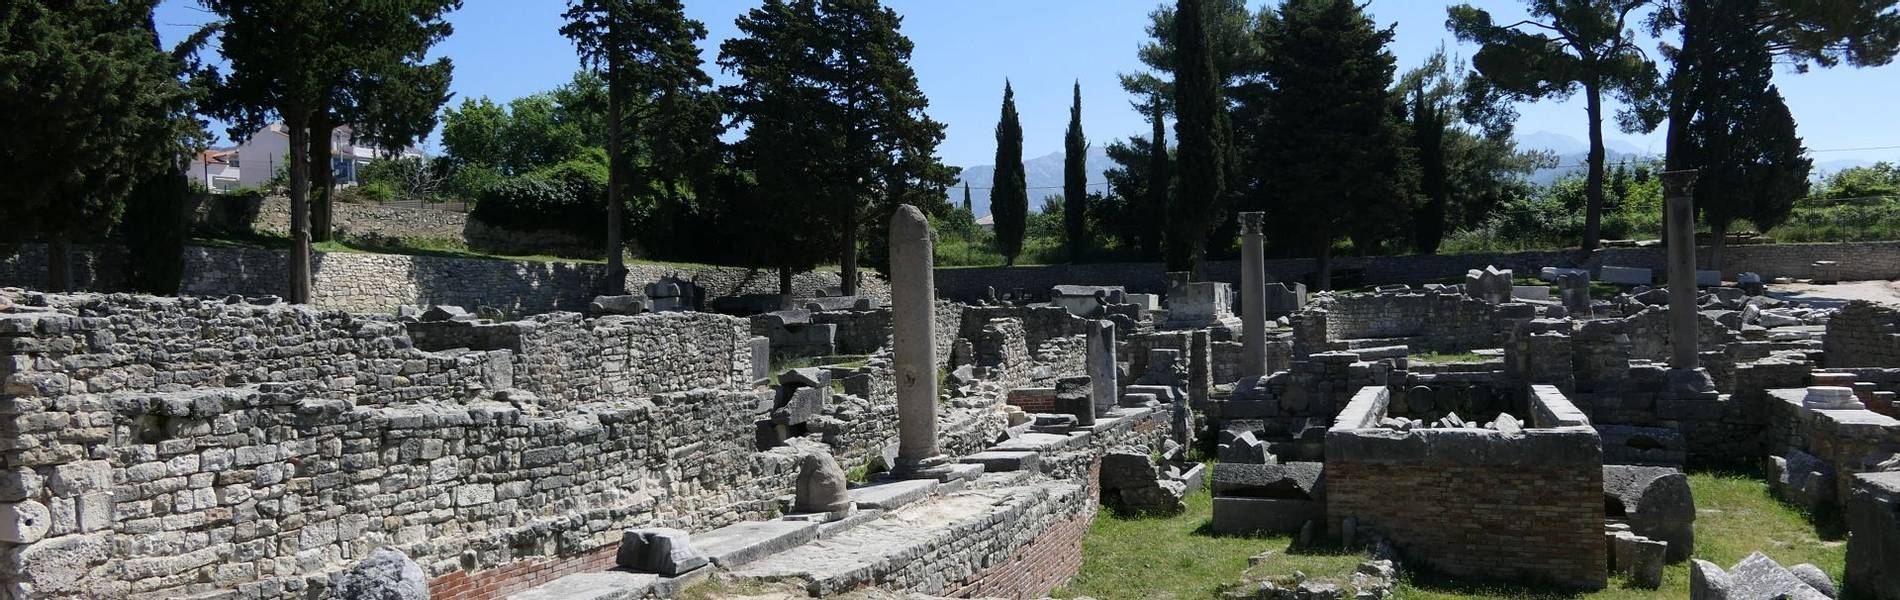 Roman ruins, Salona, Solin, Completely Croatia.JPG